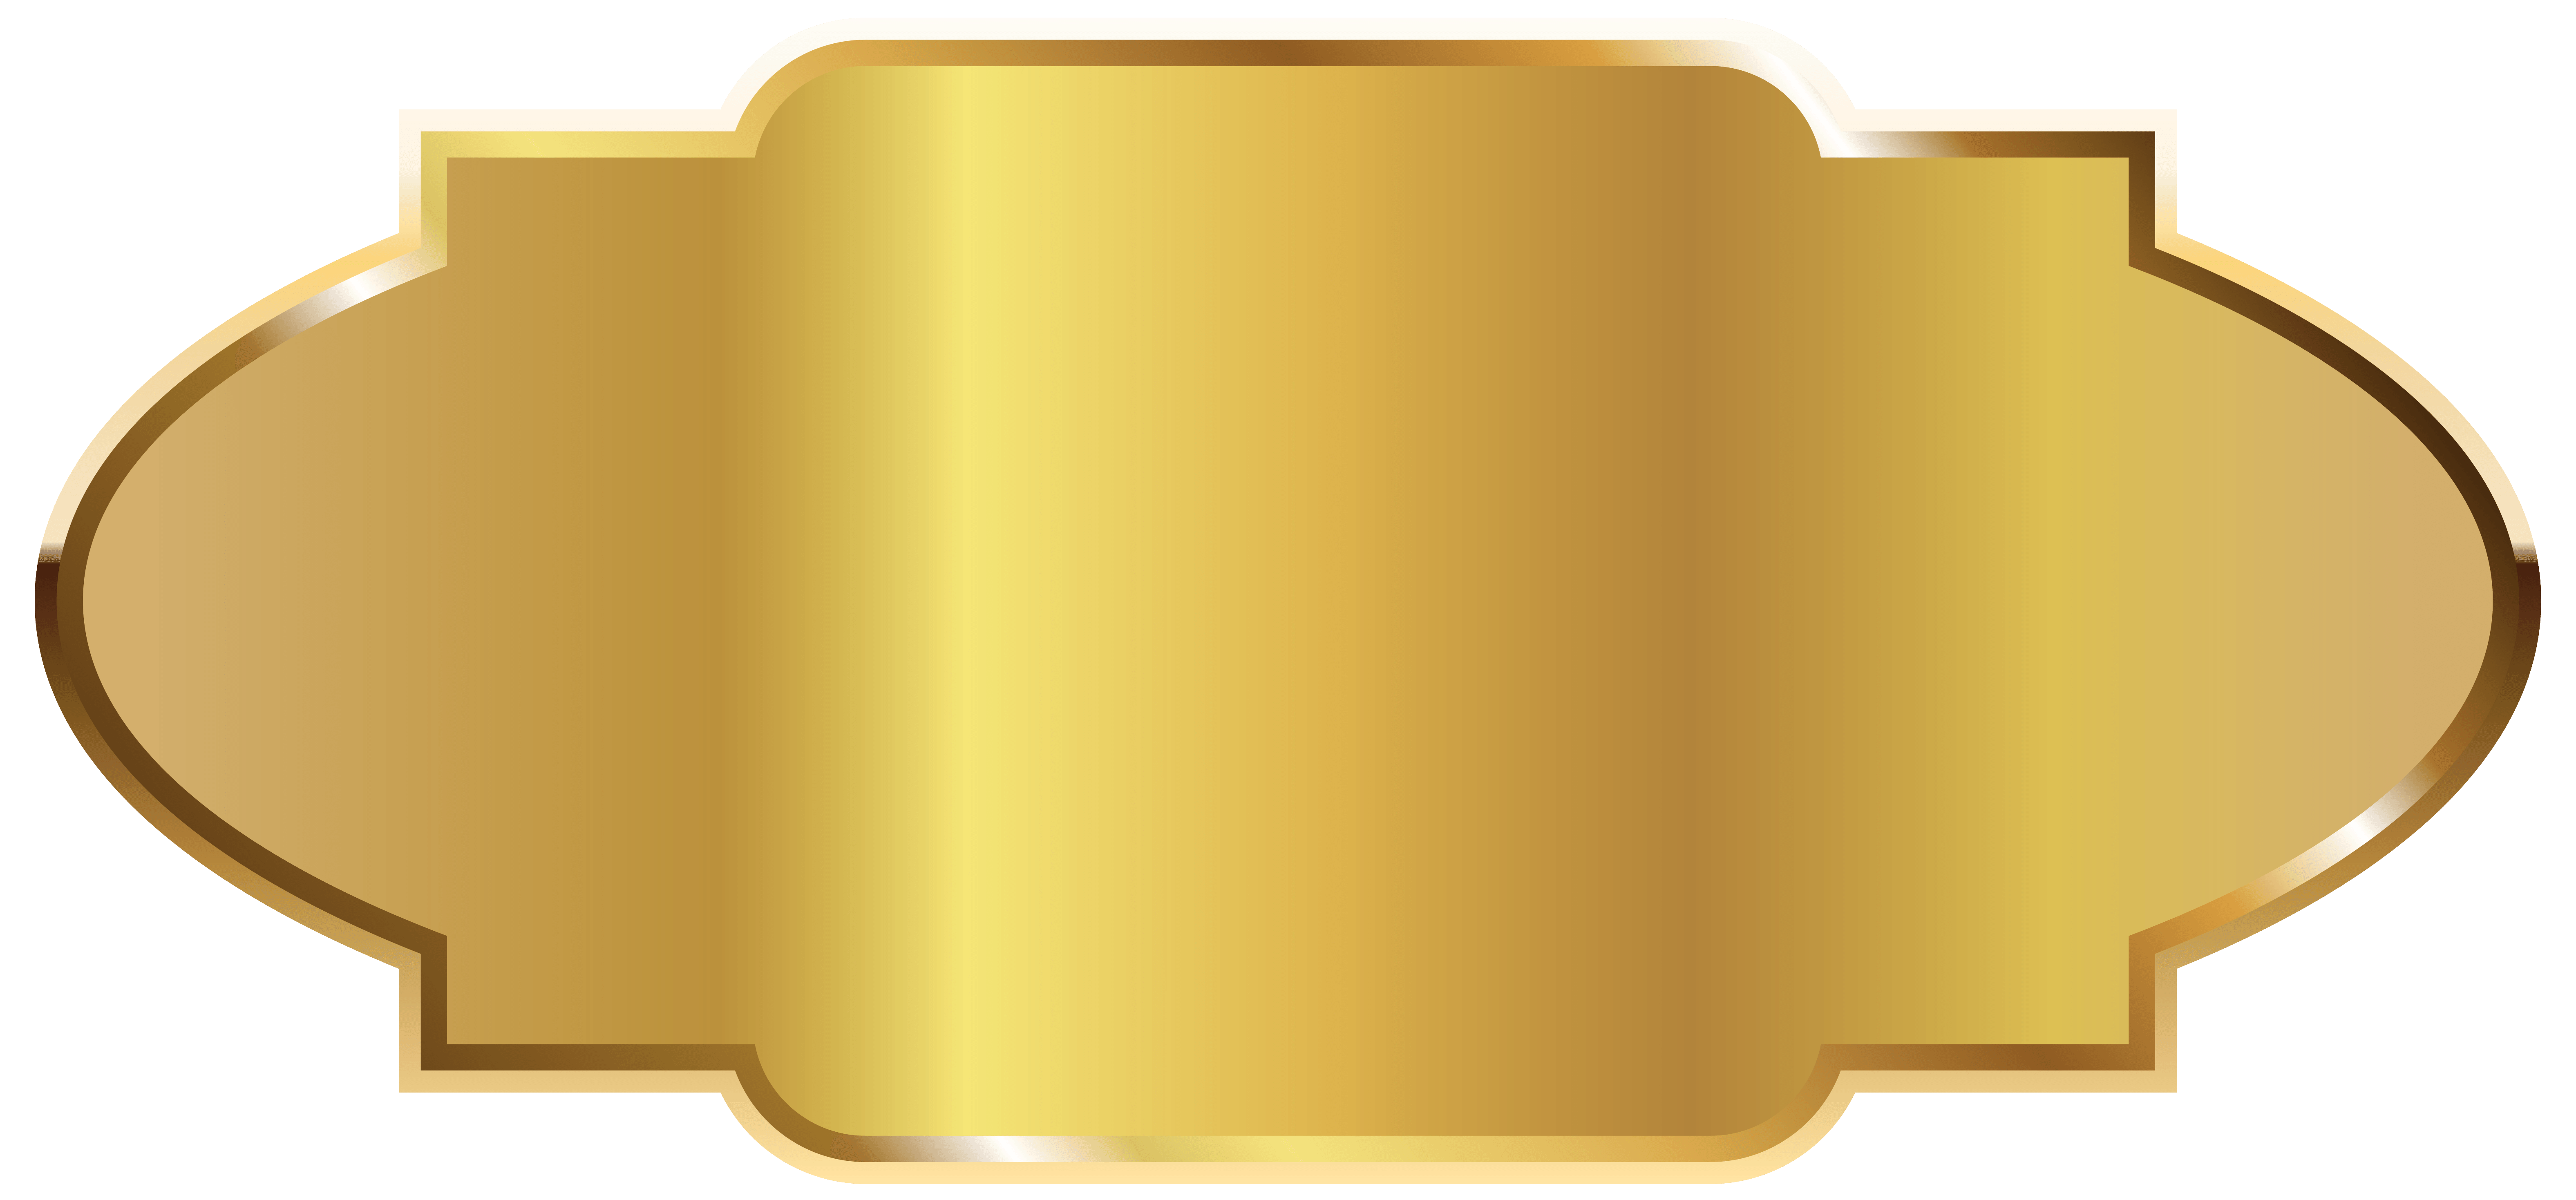 Gold Label Png Clipart Image Gold Labels Clip Art Photo Logo Design ...